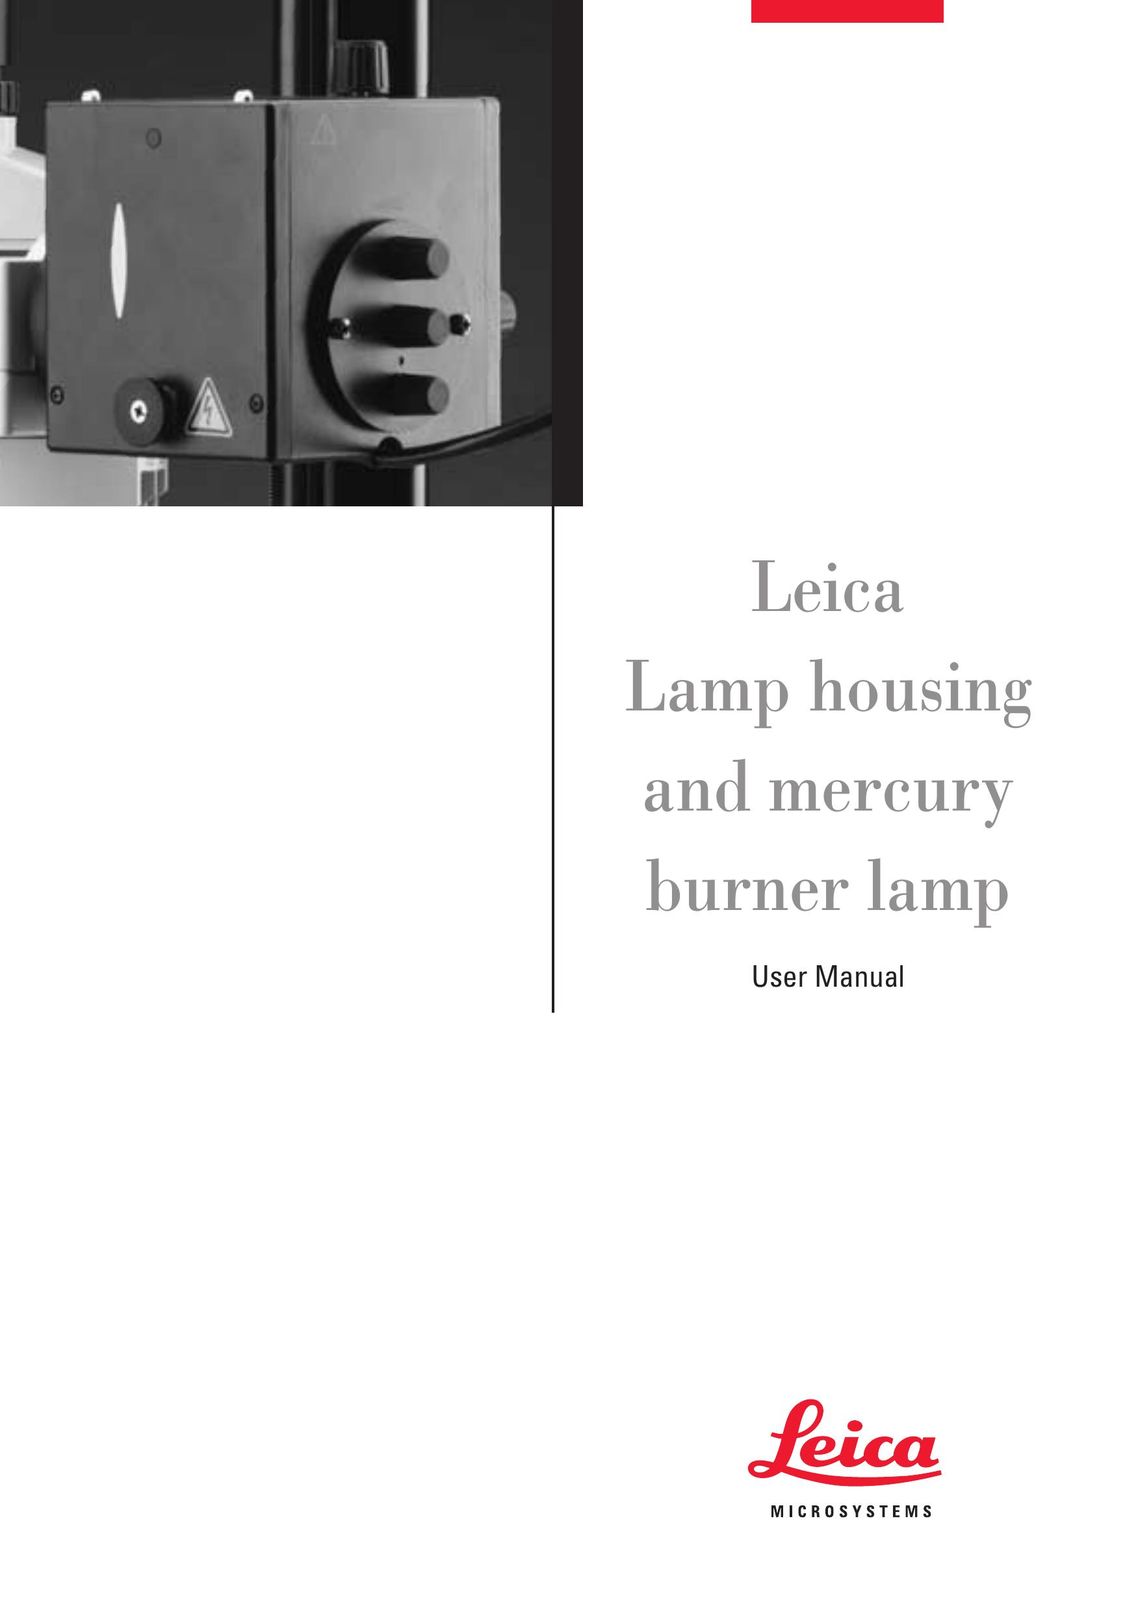 Leica MZ16 FA Indoor Furnishings User Manual